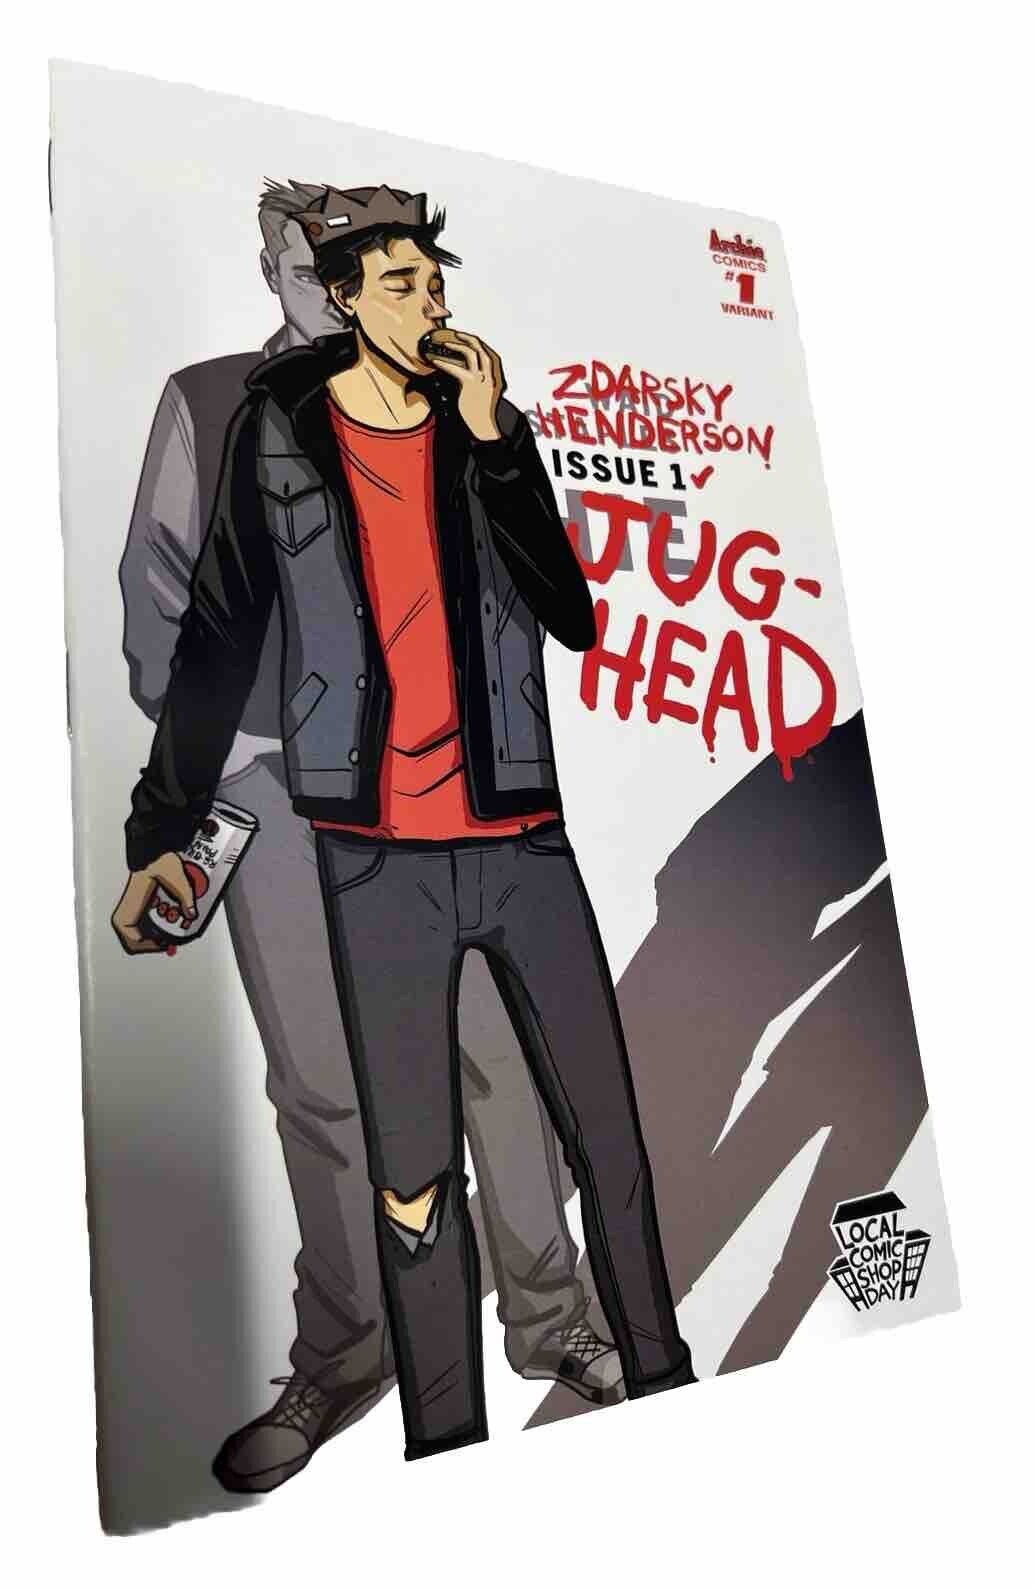 JUG-HEAD #1 (-9.6) VARIANT/CHIP ZDARSKY/HENDERSON/ARCHIE COMICS